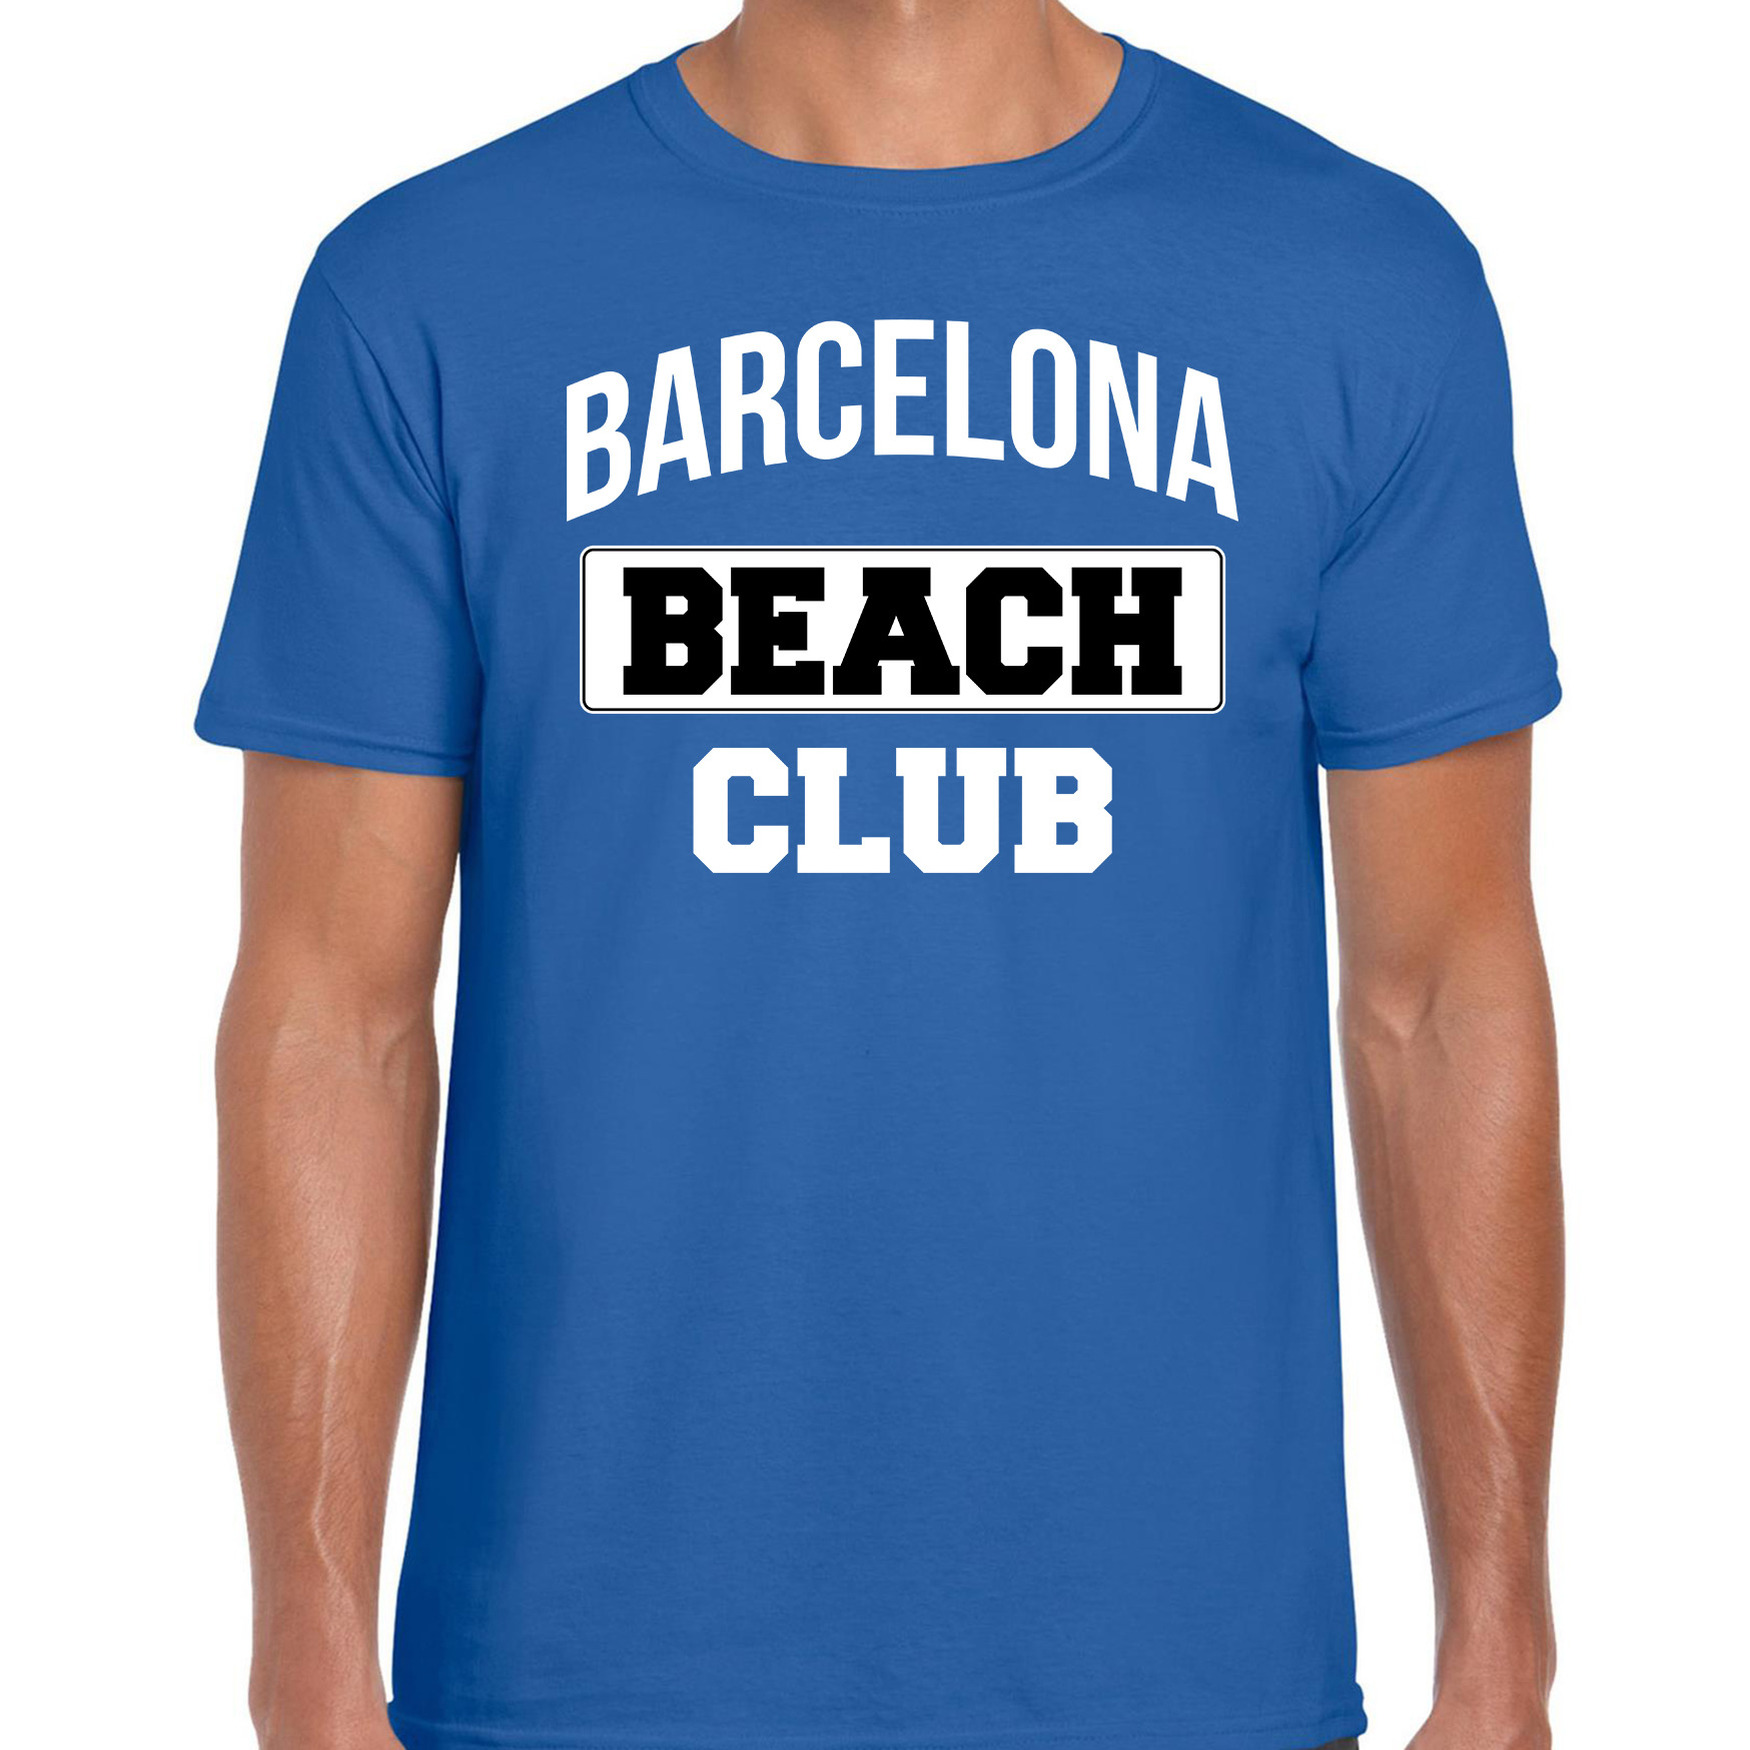 Barcelona beach club zomer t-shirt blauw voor heren